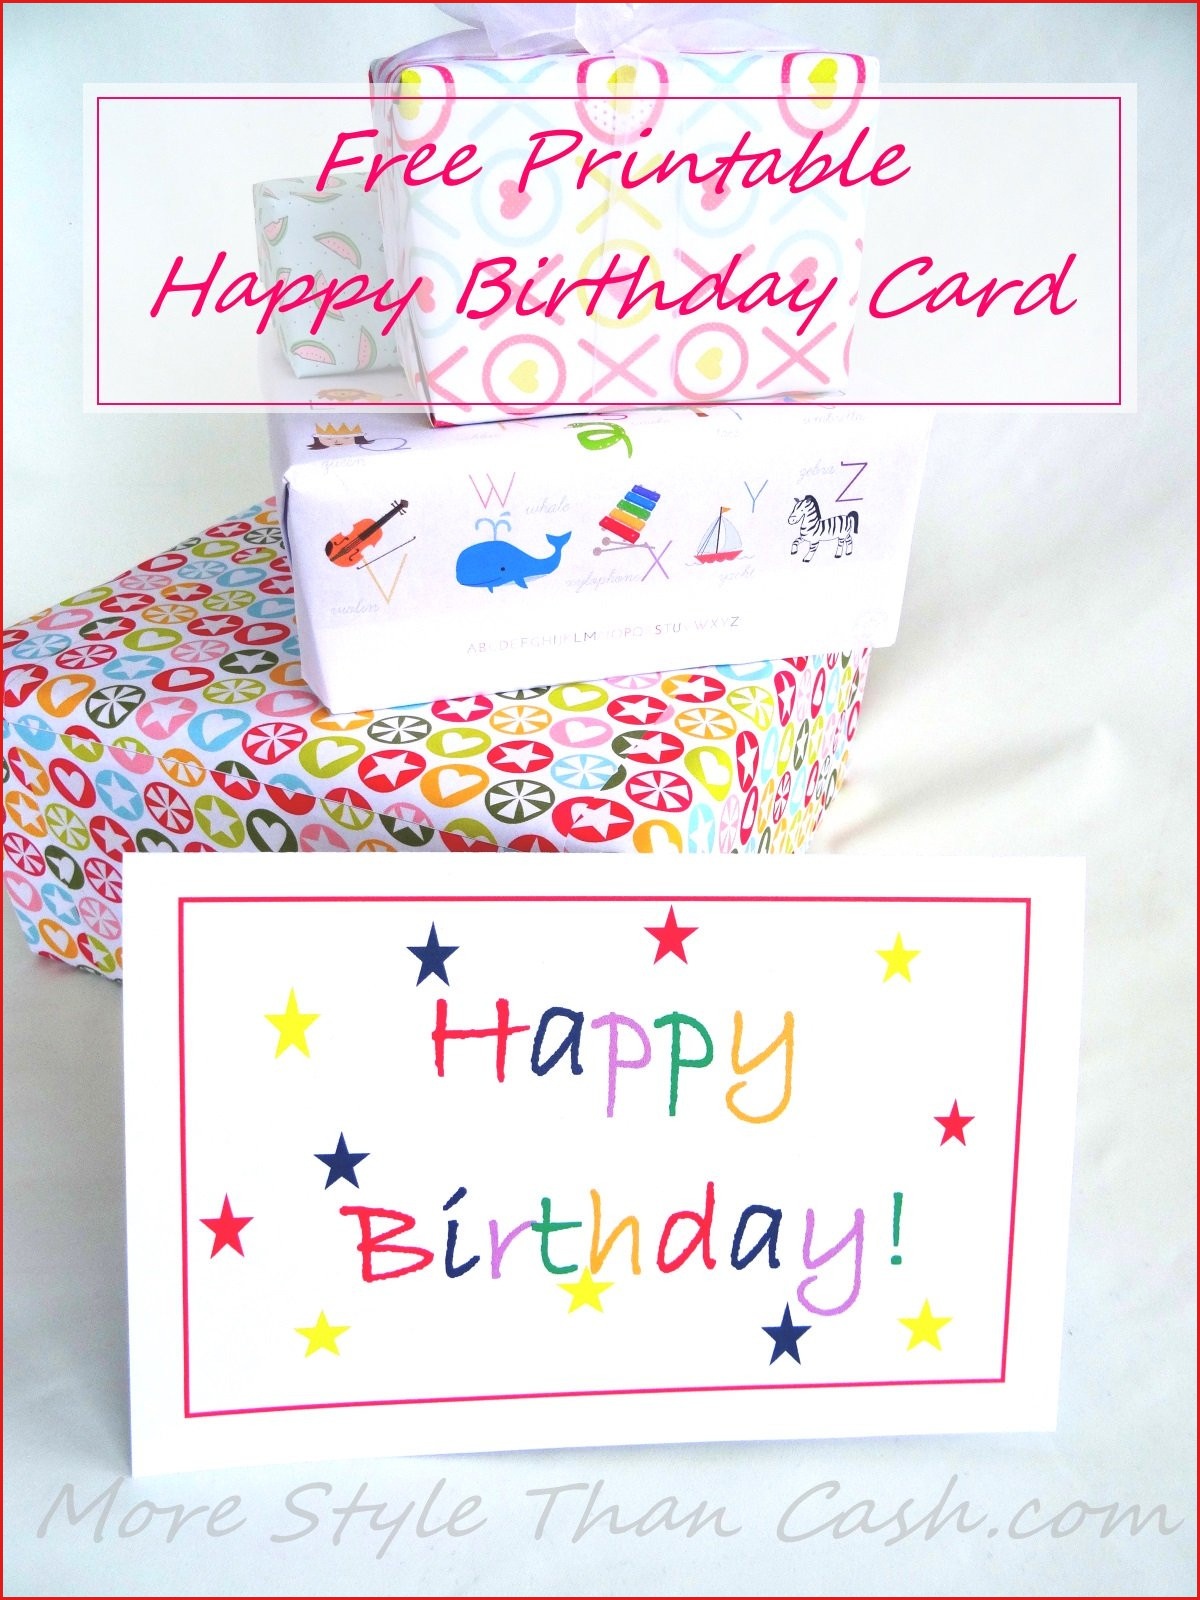 Free Printable Birthday Card Print Birthday Cards Online : Lenq - Free Printable Happy Birthday Cards Online